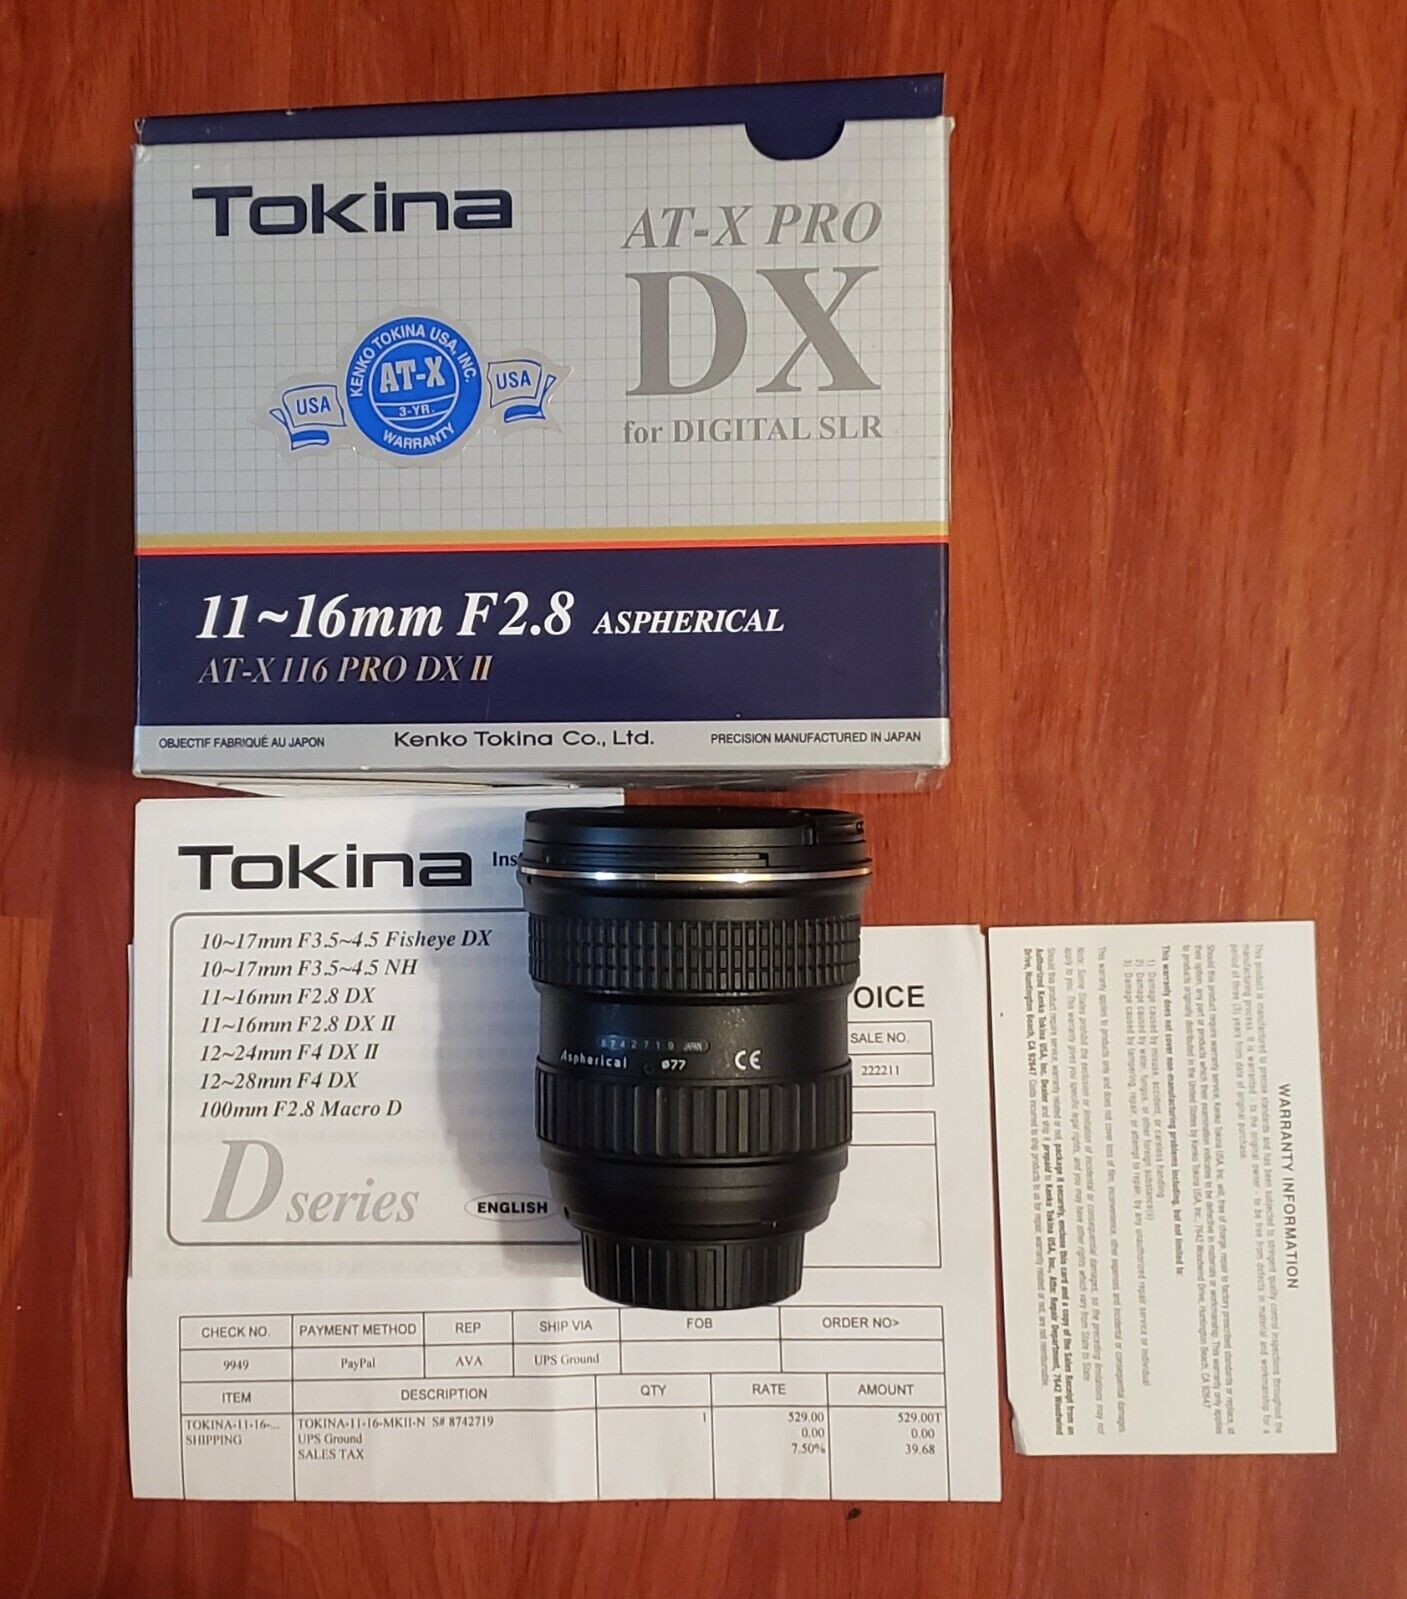 Tokina AT-X 116 Pro Dx 11-16mm F2.8 | eBay